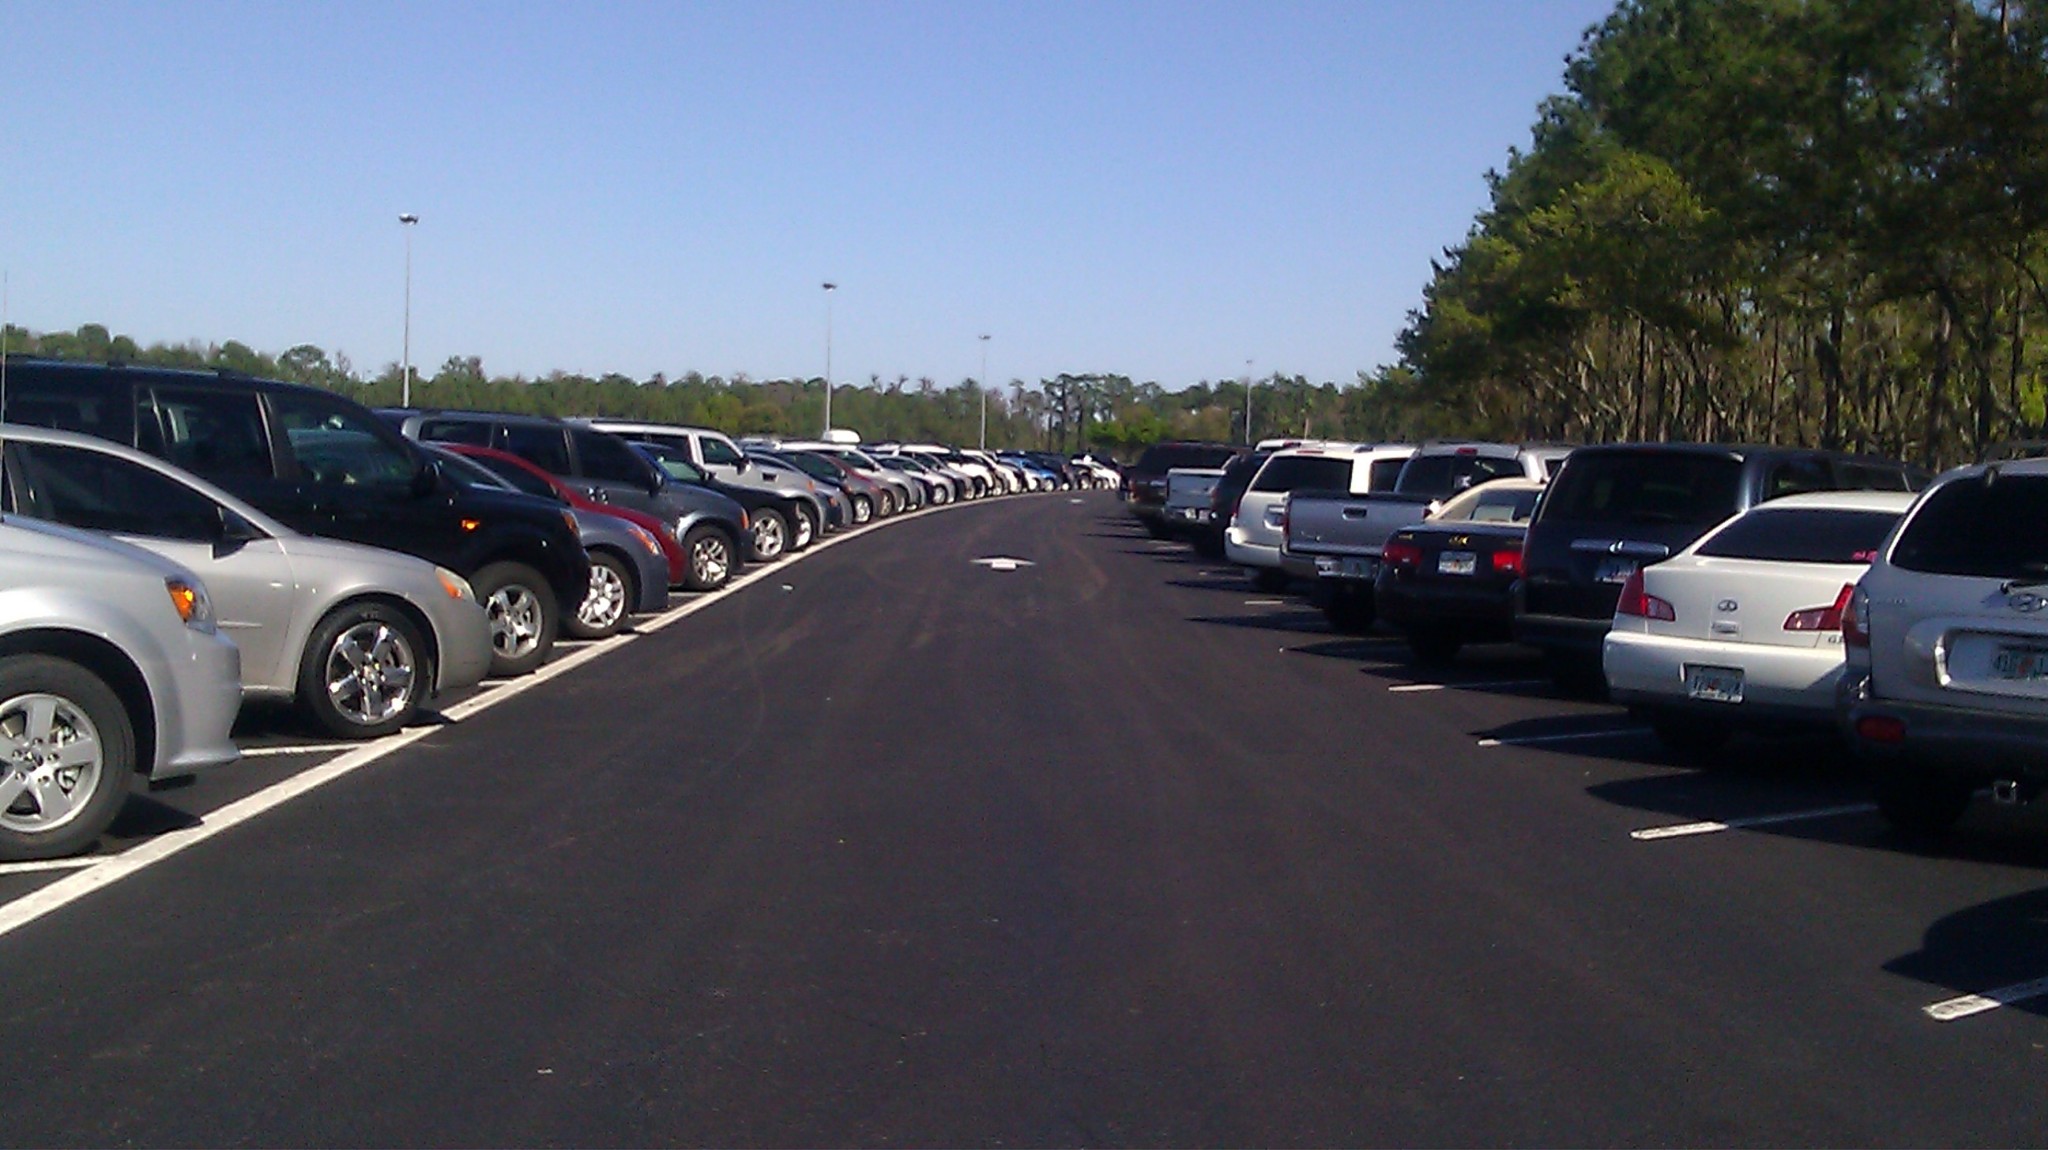 Walt Disney World Parking Rates Have Increased